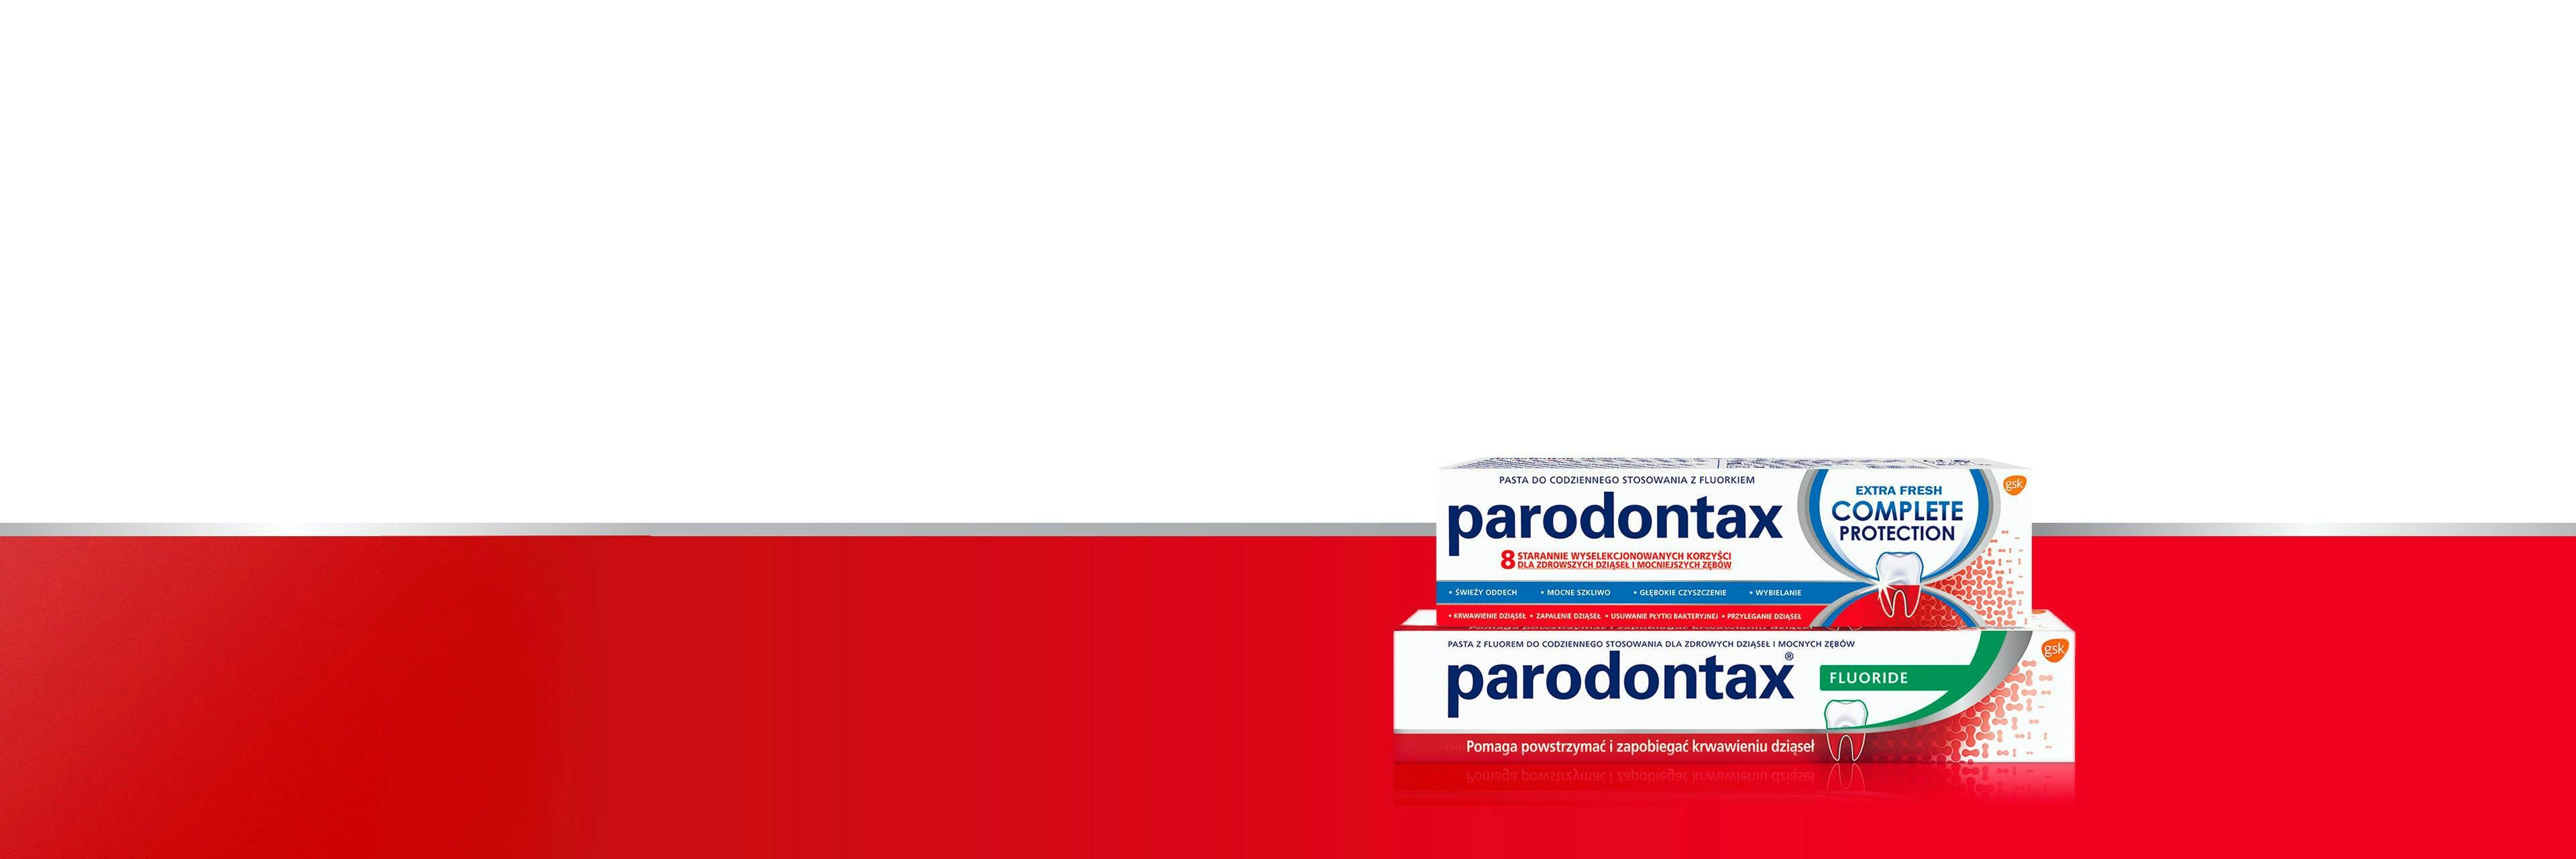 parodontax Fluoride